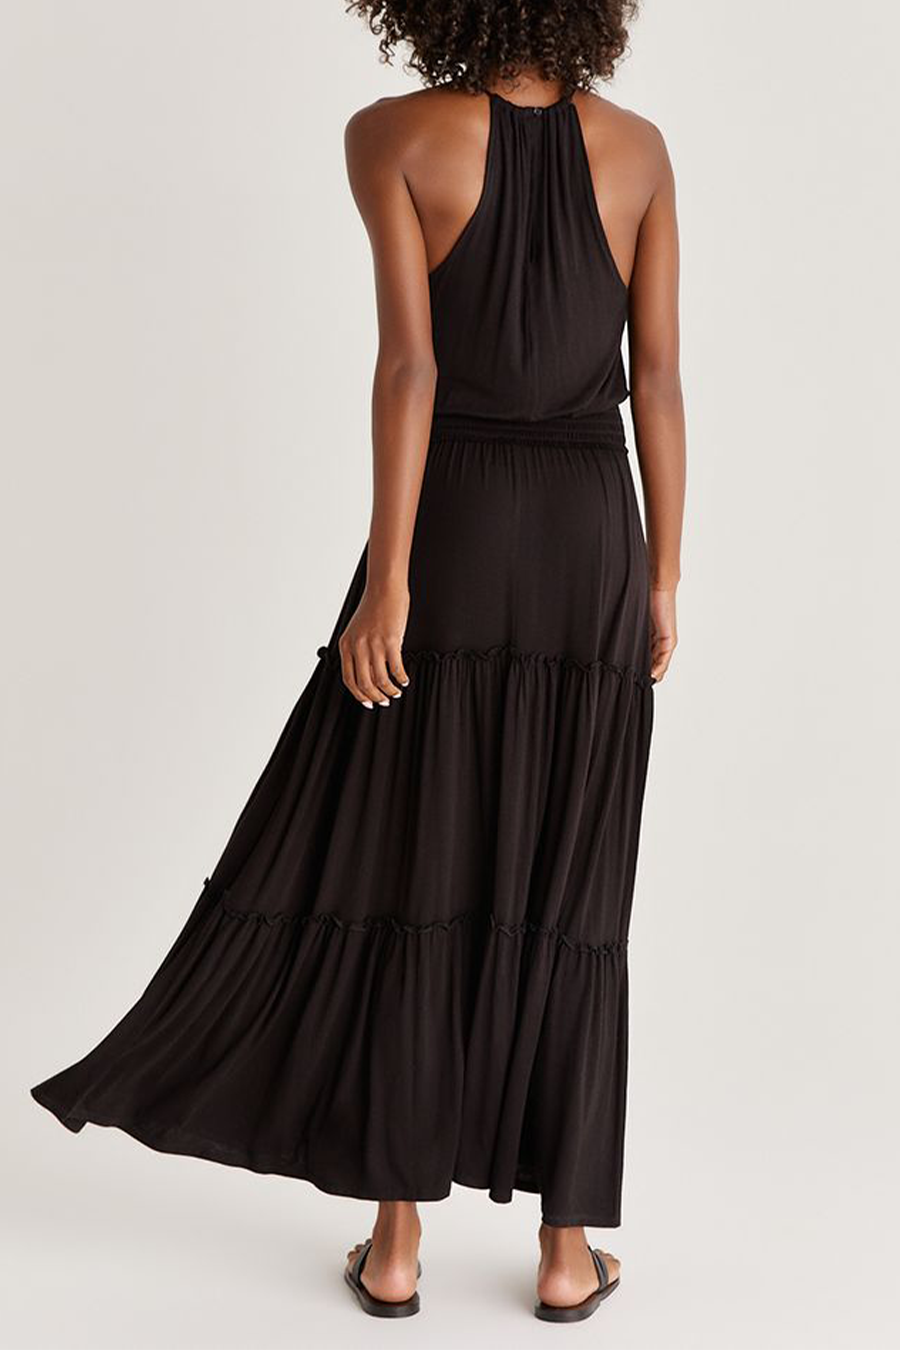 Beverly Sleek Dress | Black - Main Image Number 2 of 2